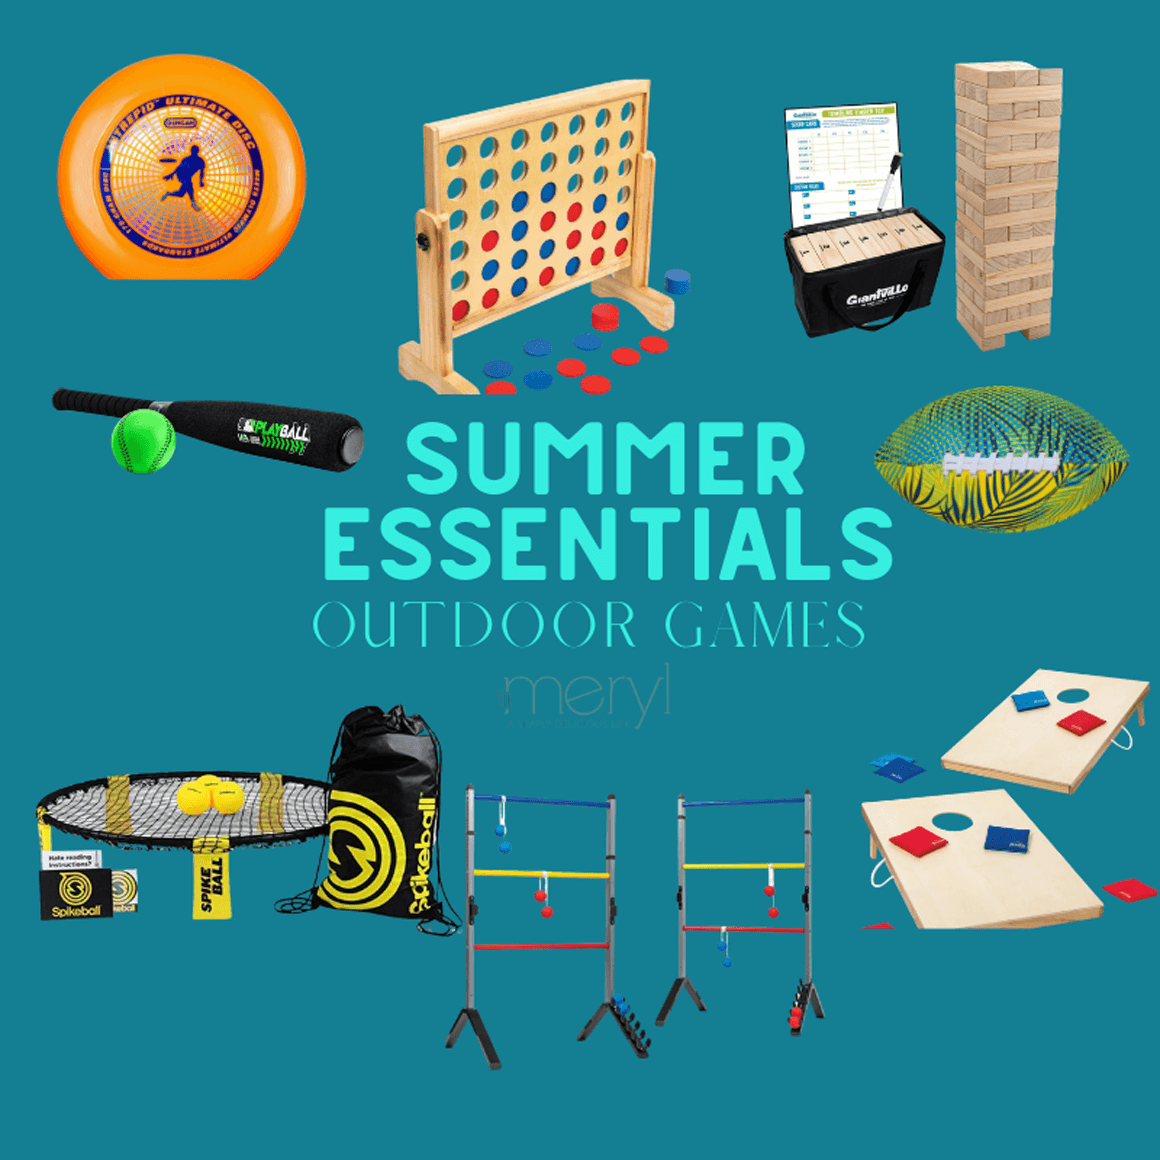 Summer Essentials Outdoor Games